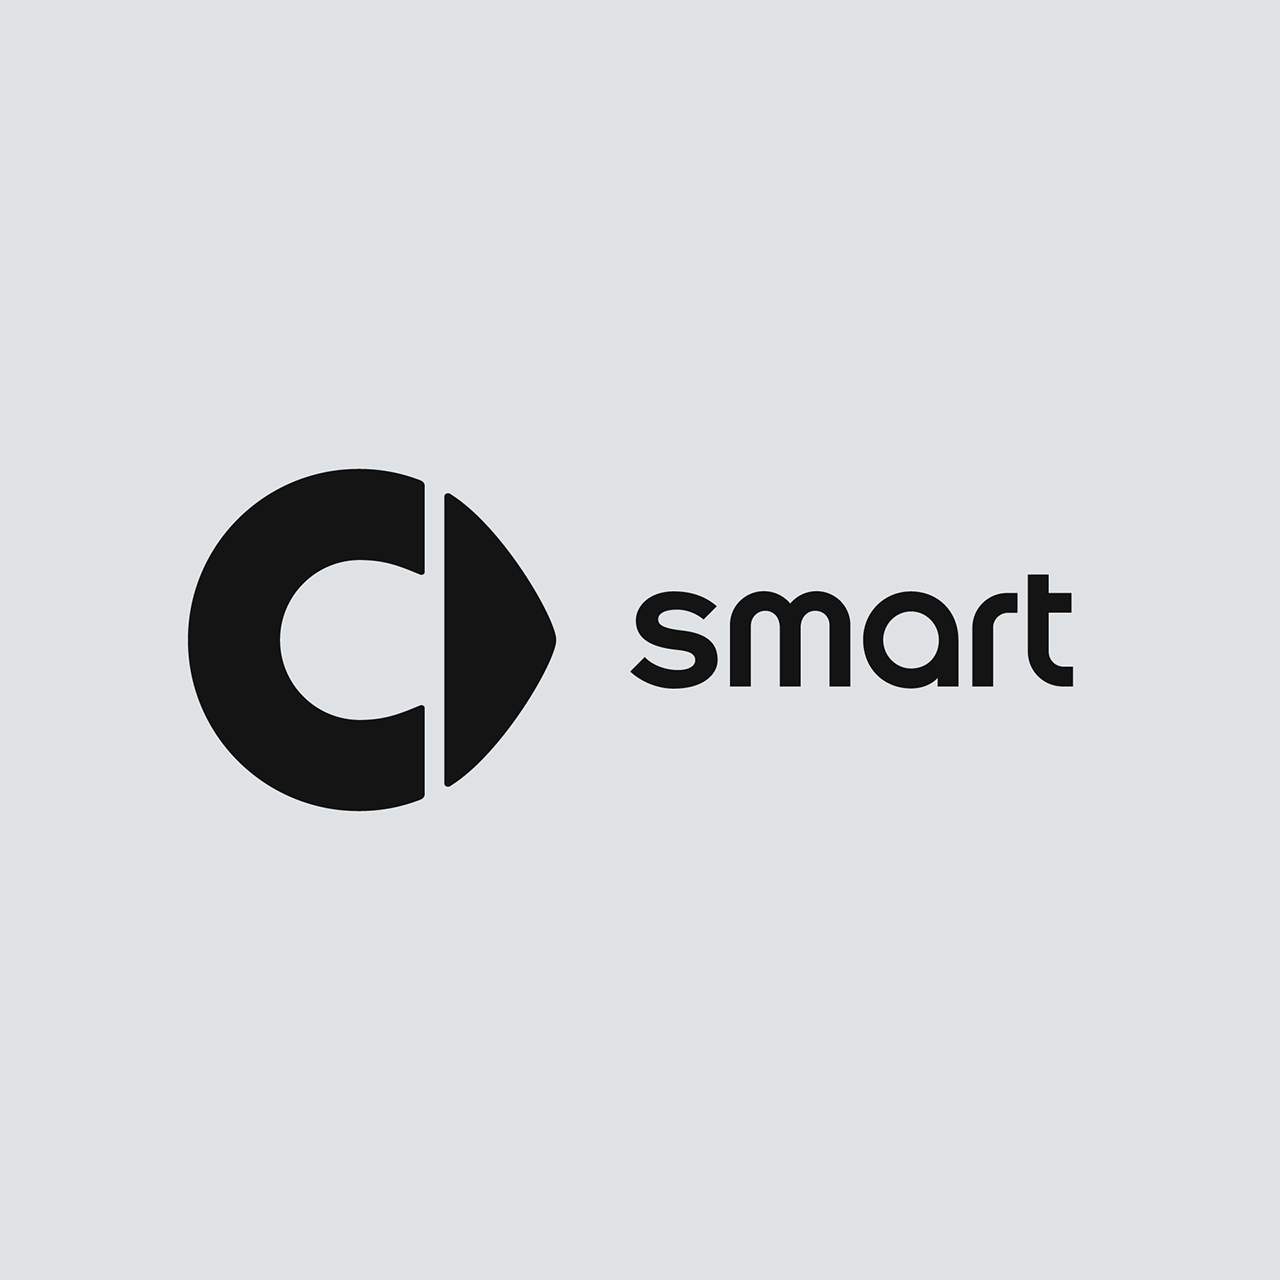 smart Logo, smart Car Symbol Meaning And History | Car brands - car logos,  meaning and symbol | Smart car, Car logos, Car symbols